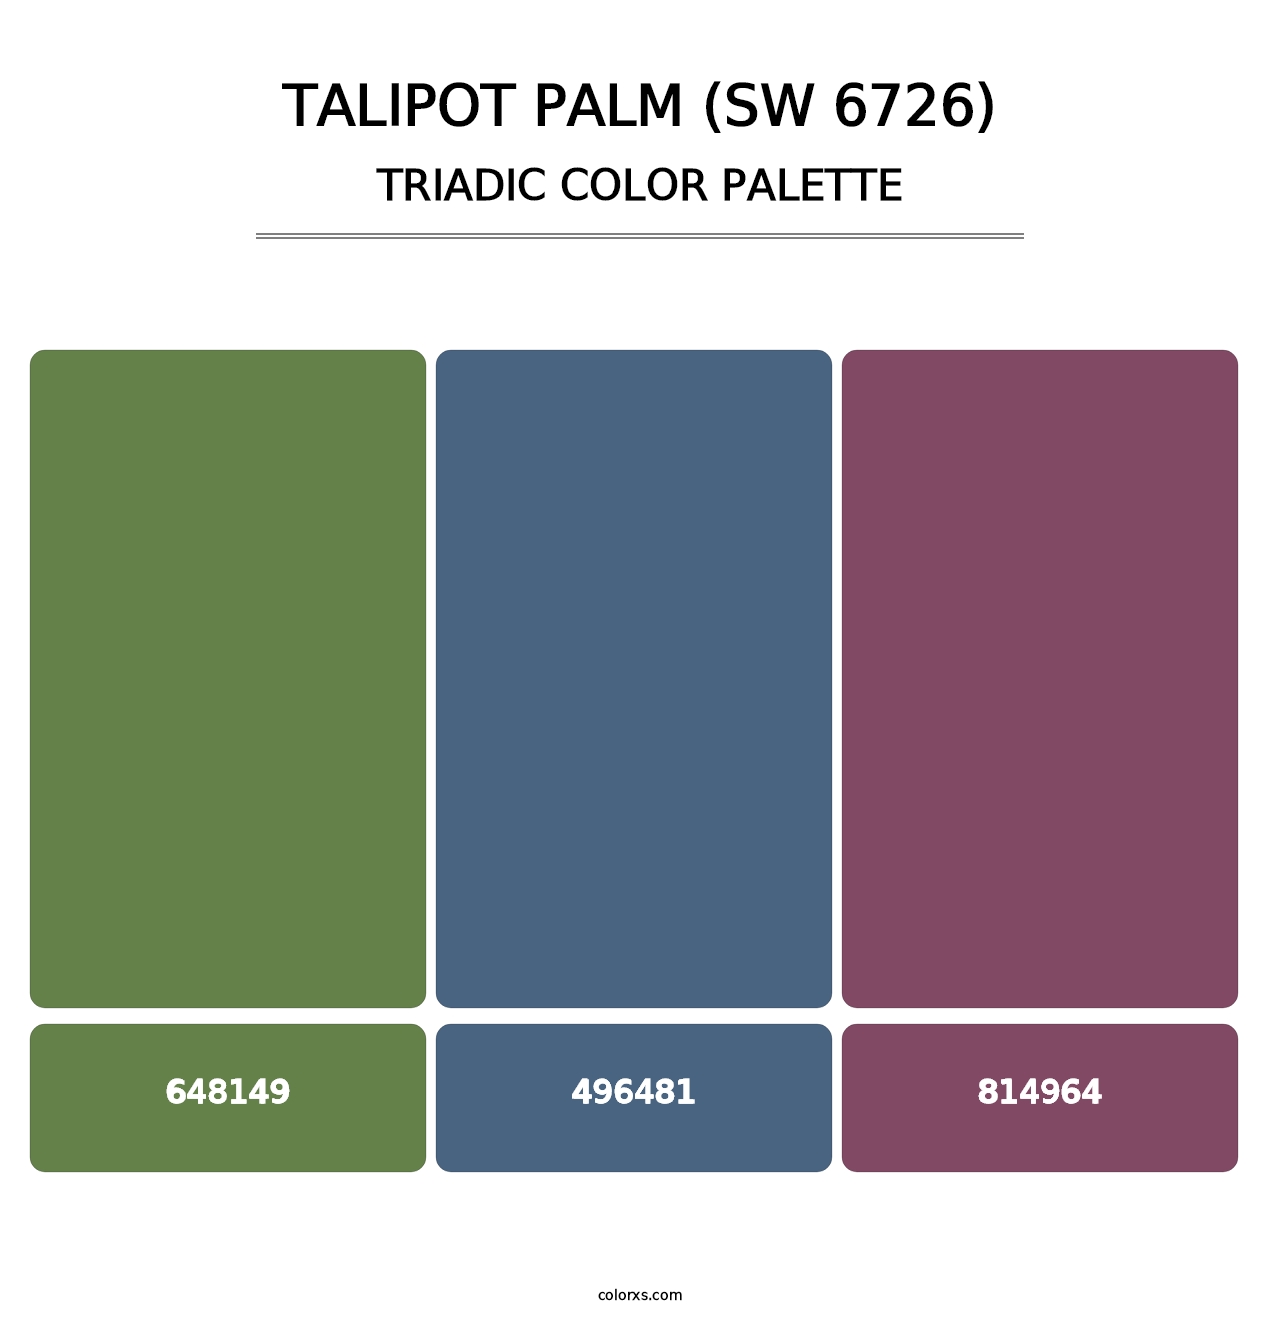 Talipot Palm (SW 6726) - Triadic Color Palette